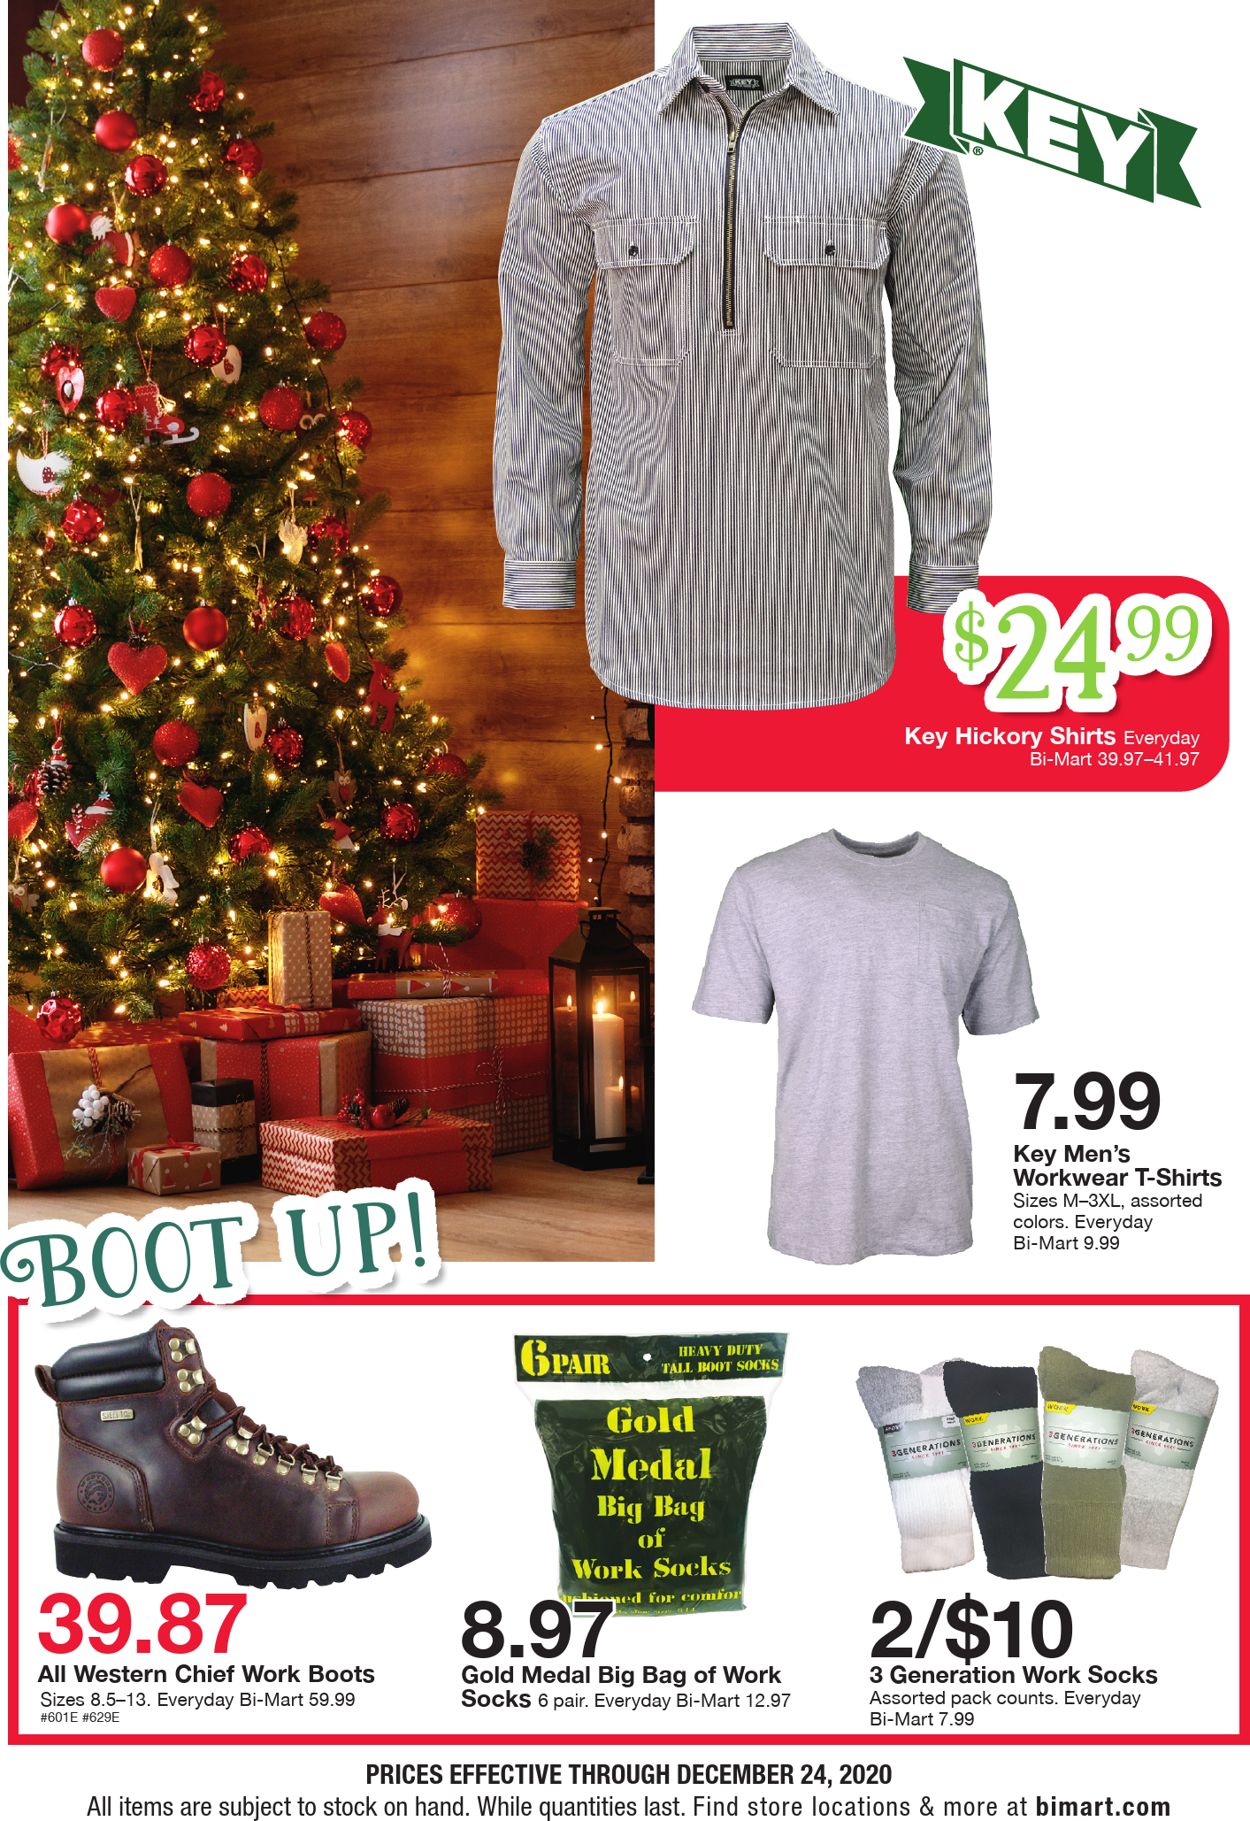 Catalogue Bi-Mart Christmas Savings 2020 from 12/09/2020